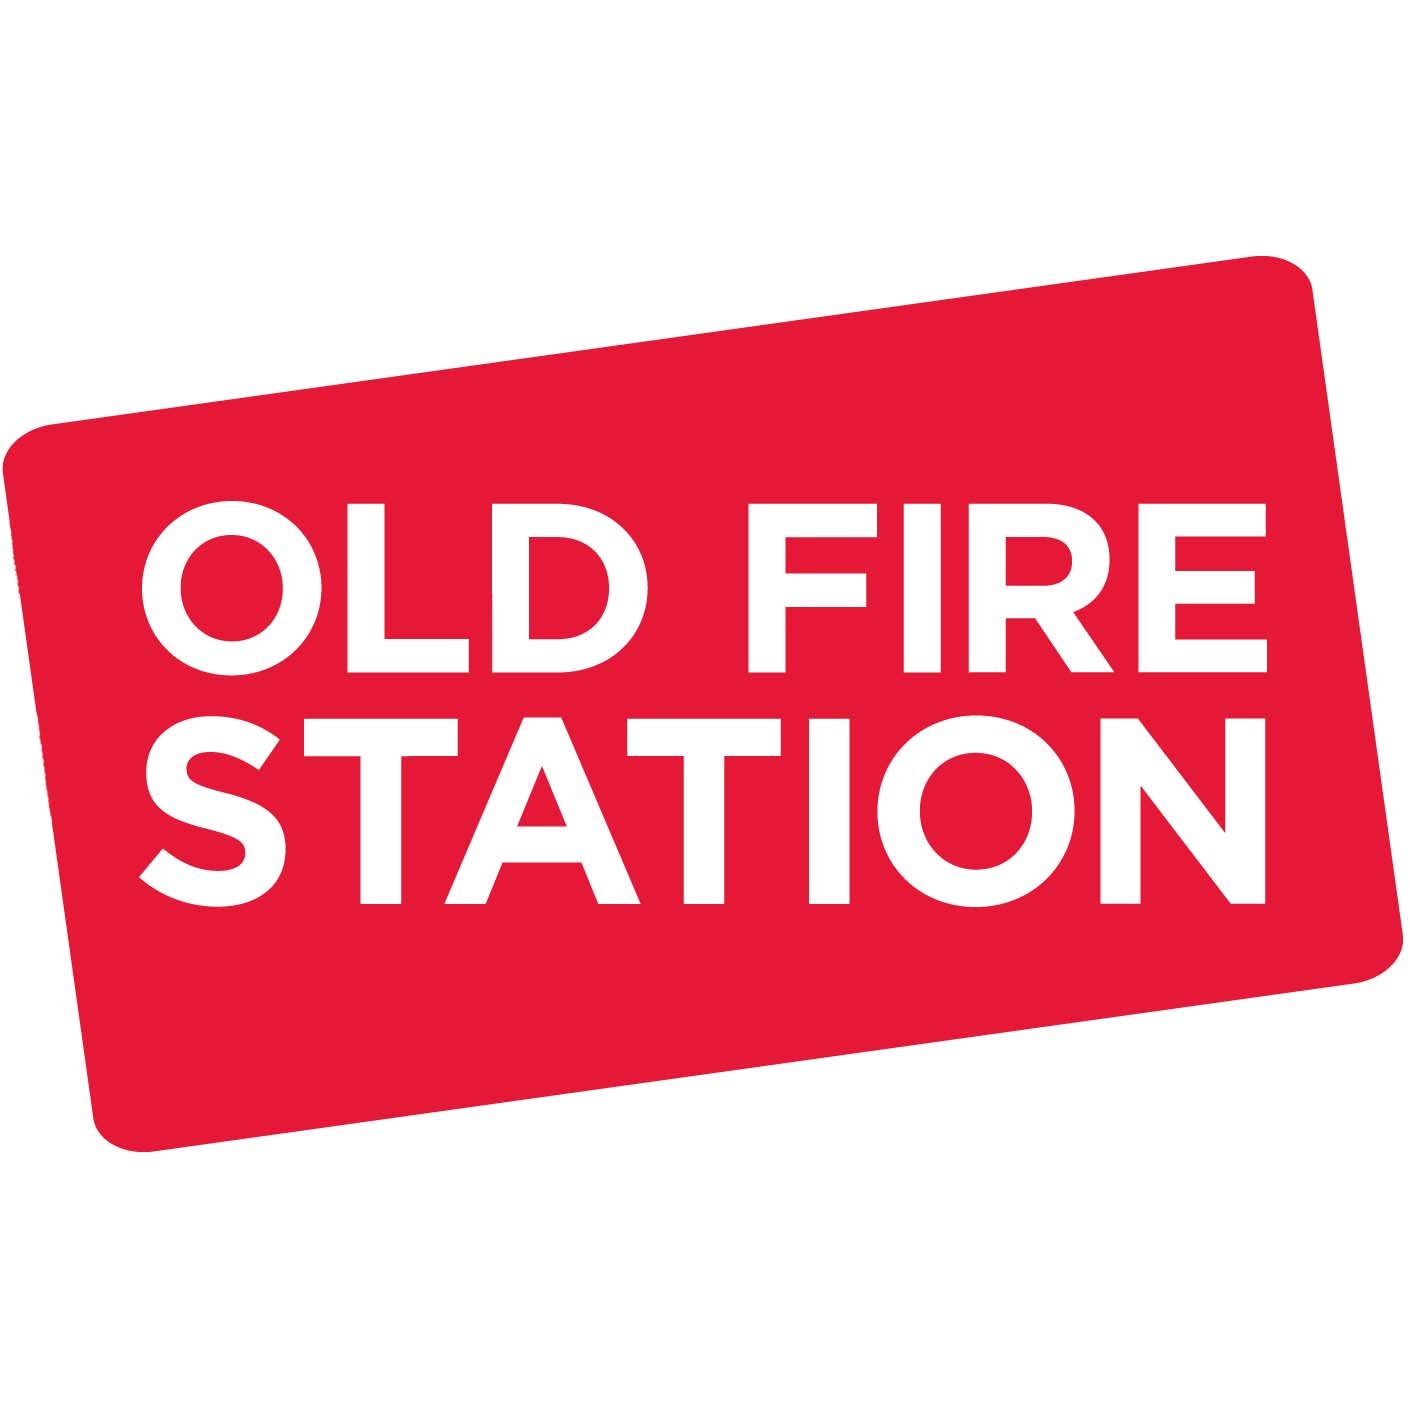 OLD-FIRE-STATION-LOGO-on-square.jpg